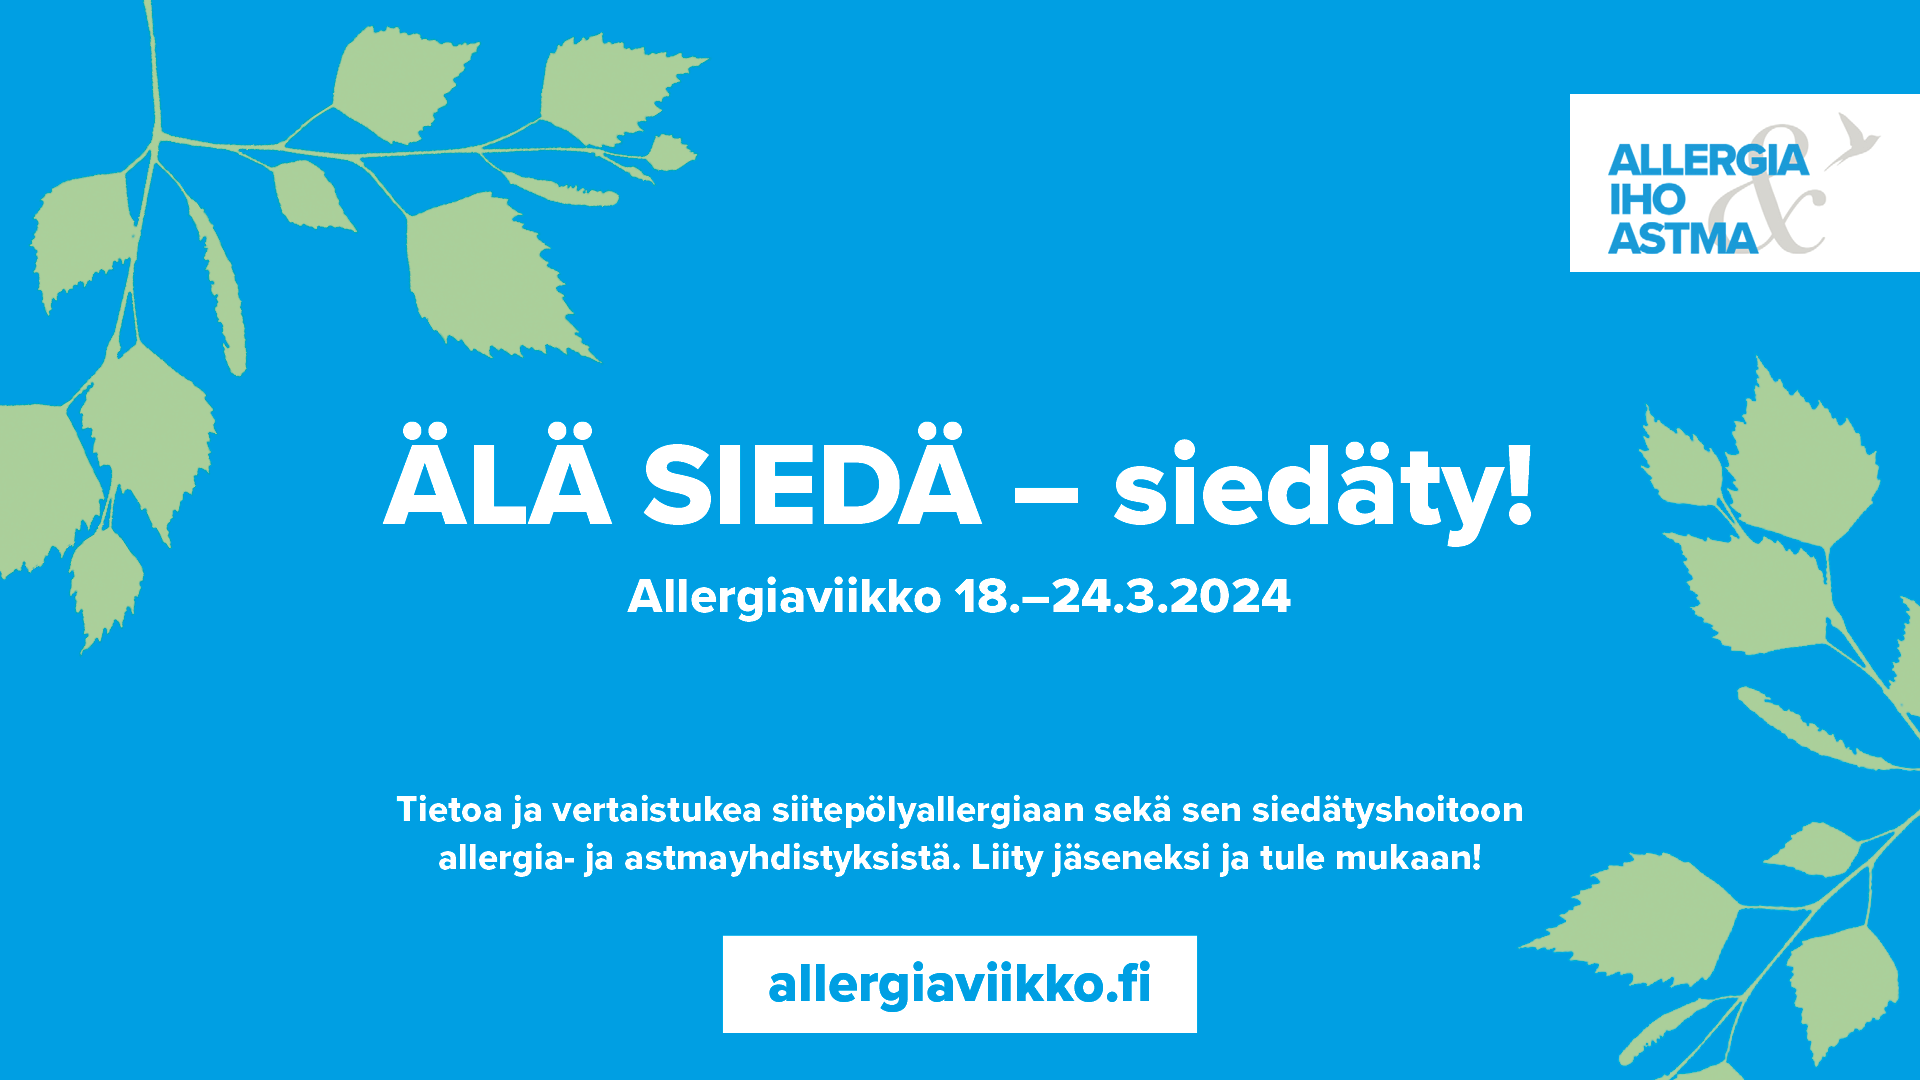 allergiaviikko2024_ala_sieda_siedaty_1920x1080_vaaka2.png